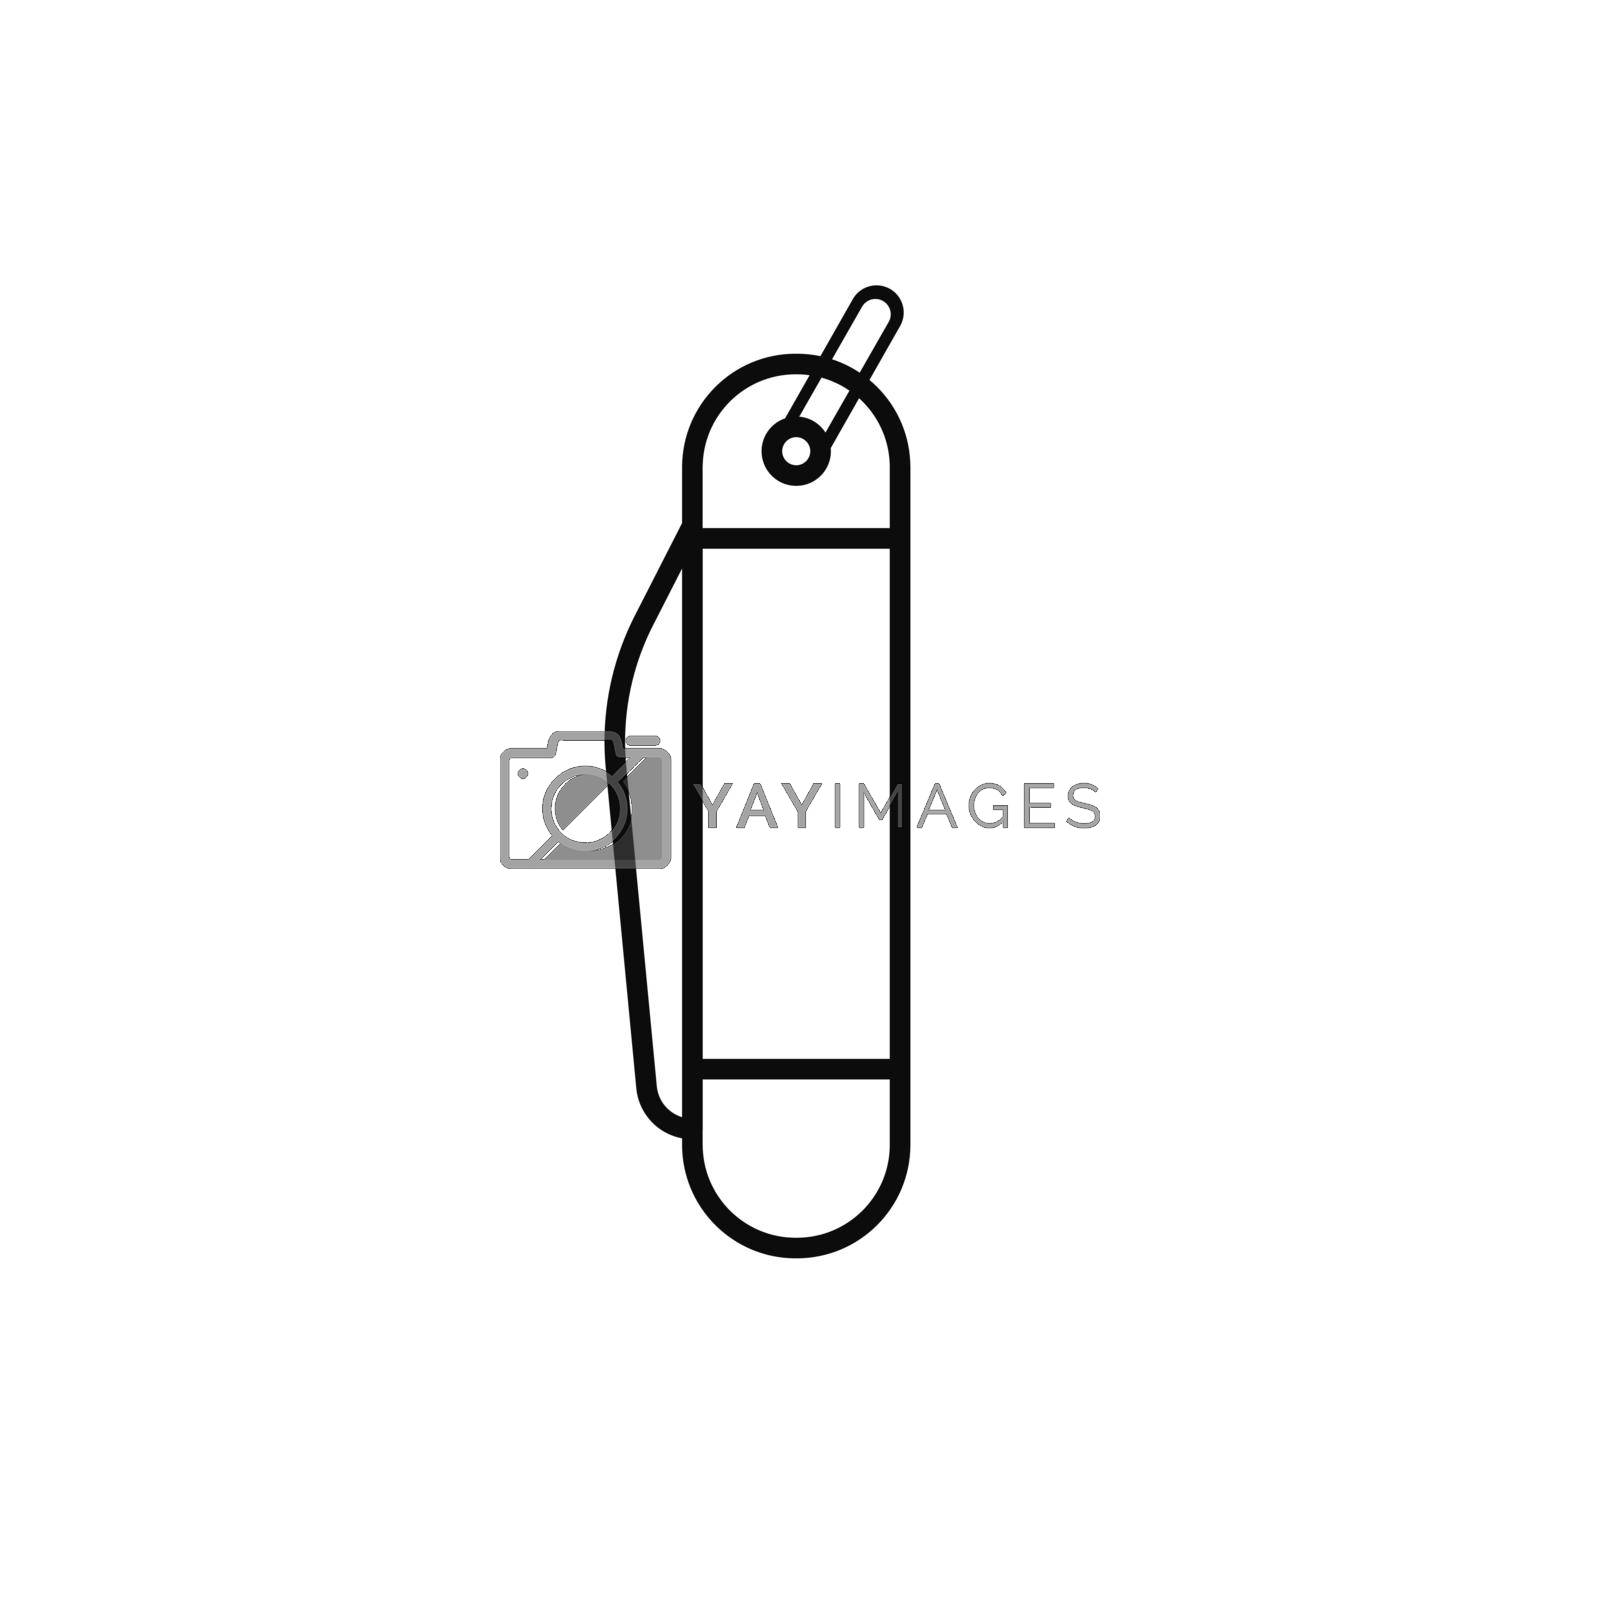 Royalty free image of Multi knife line icon isolated on white background. Folding knife vector illustration. by DmytroRazinkov